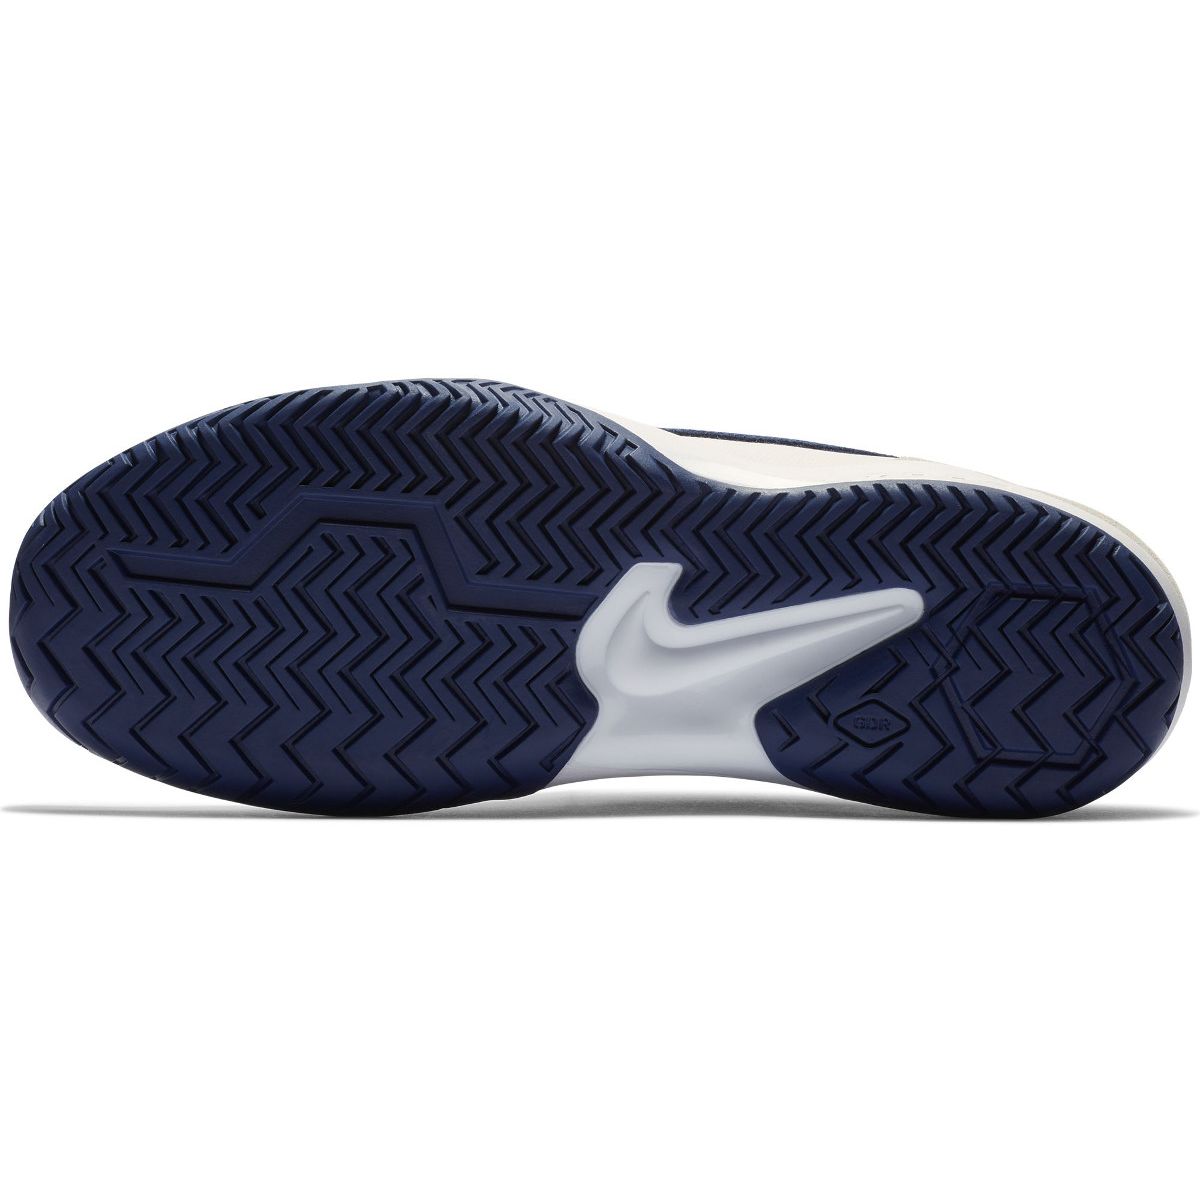 Nike Air Zoom Resistance Men's Tennis Shoes 918194-002